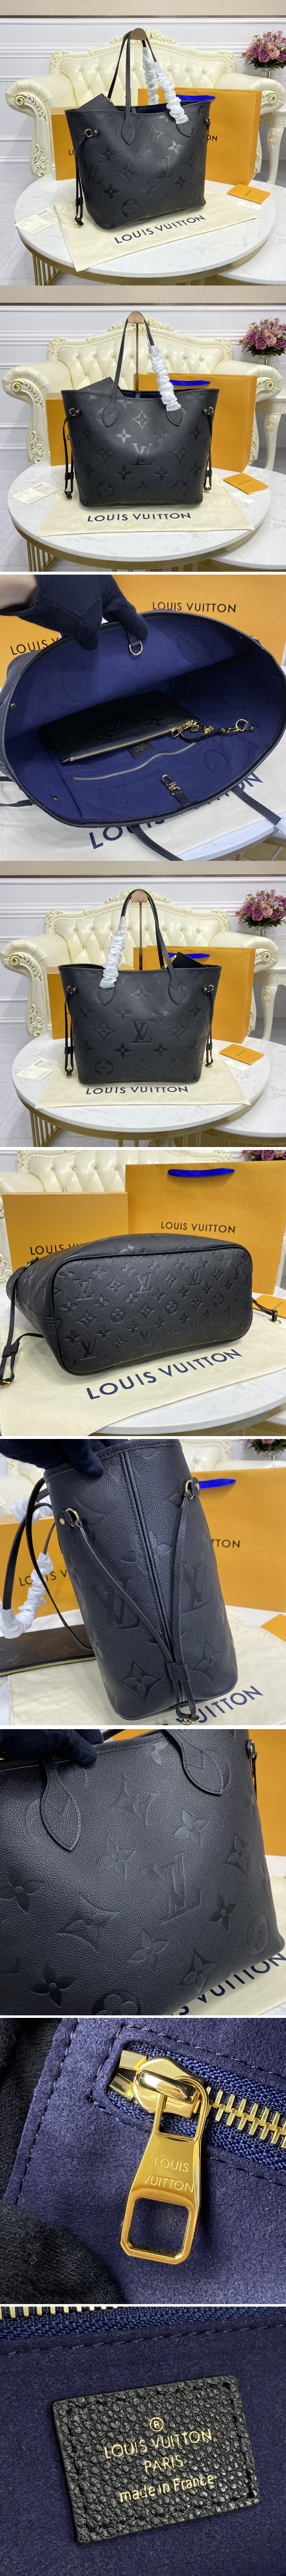 Louis Vuitton M45685 LV Neverfull MM tote Bag in Black Monogram